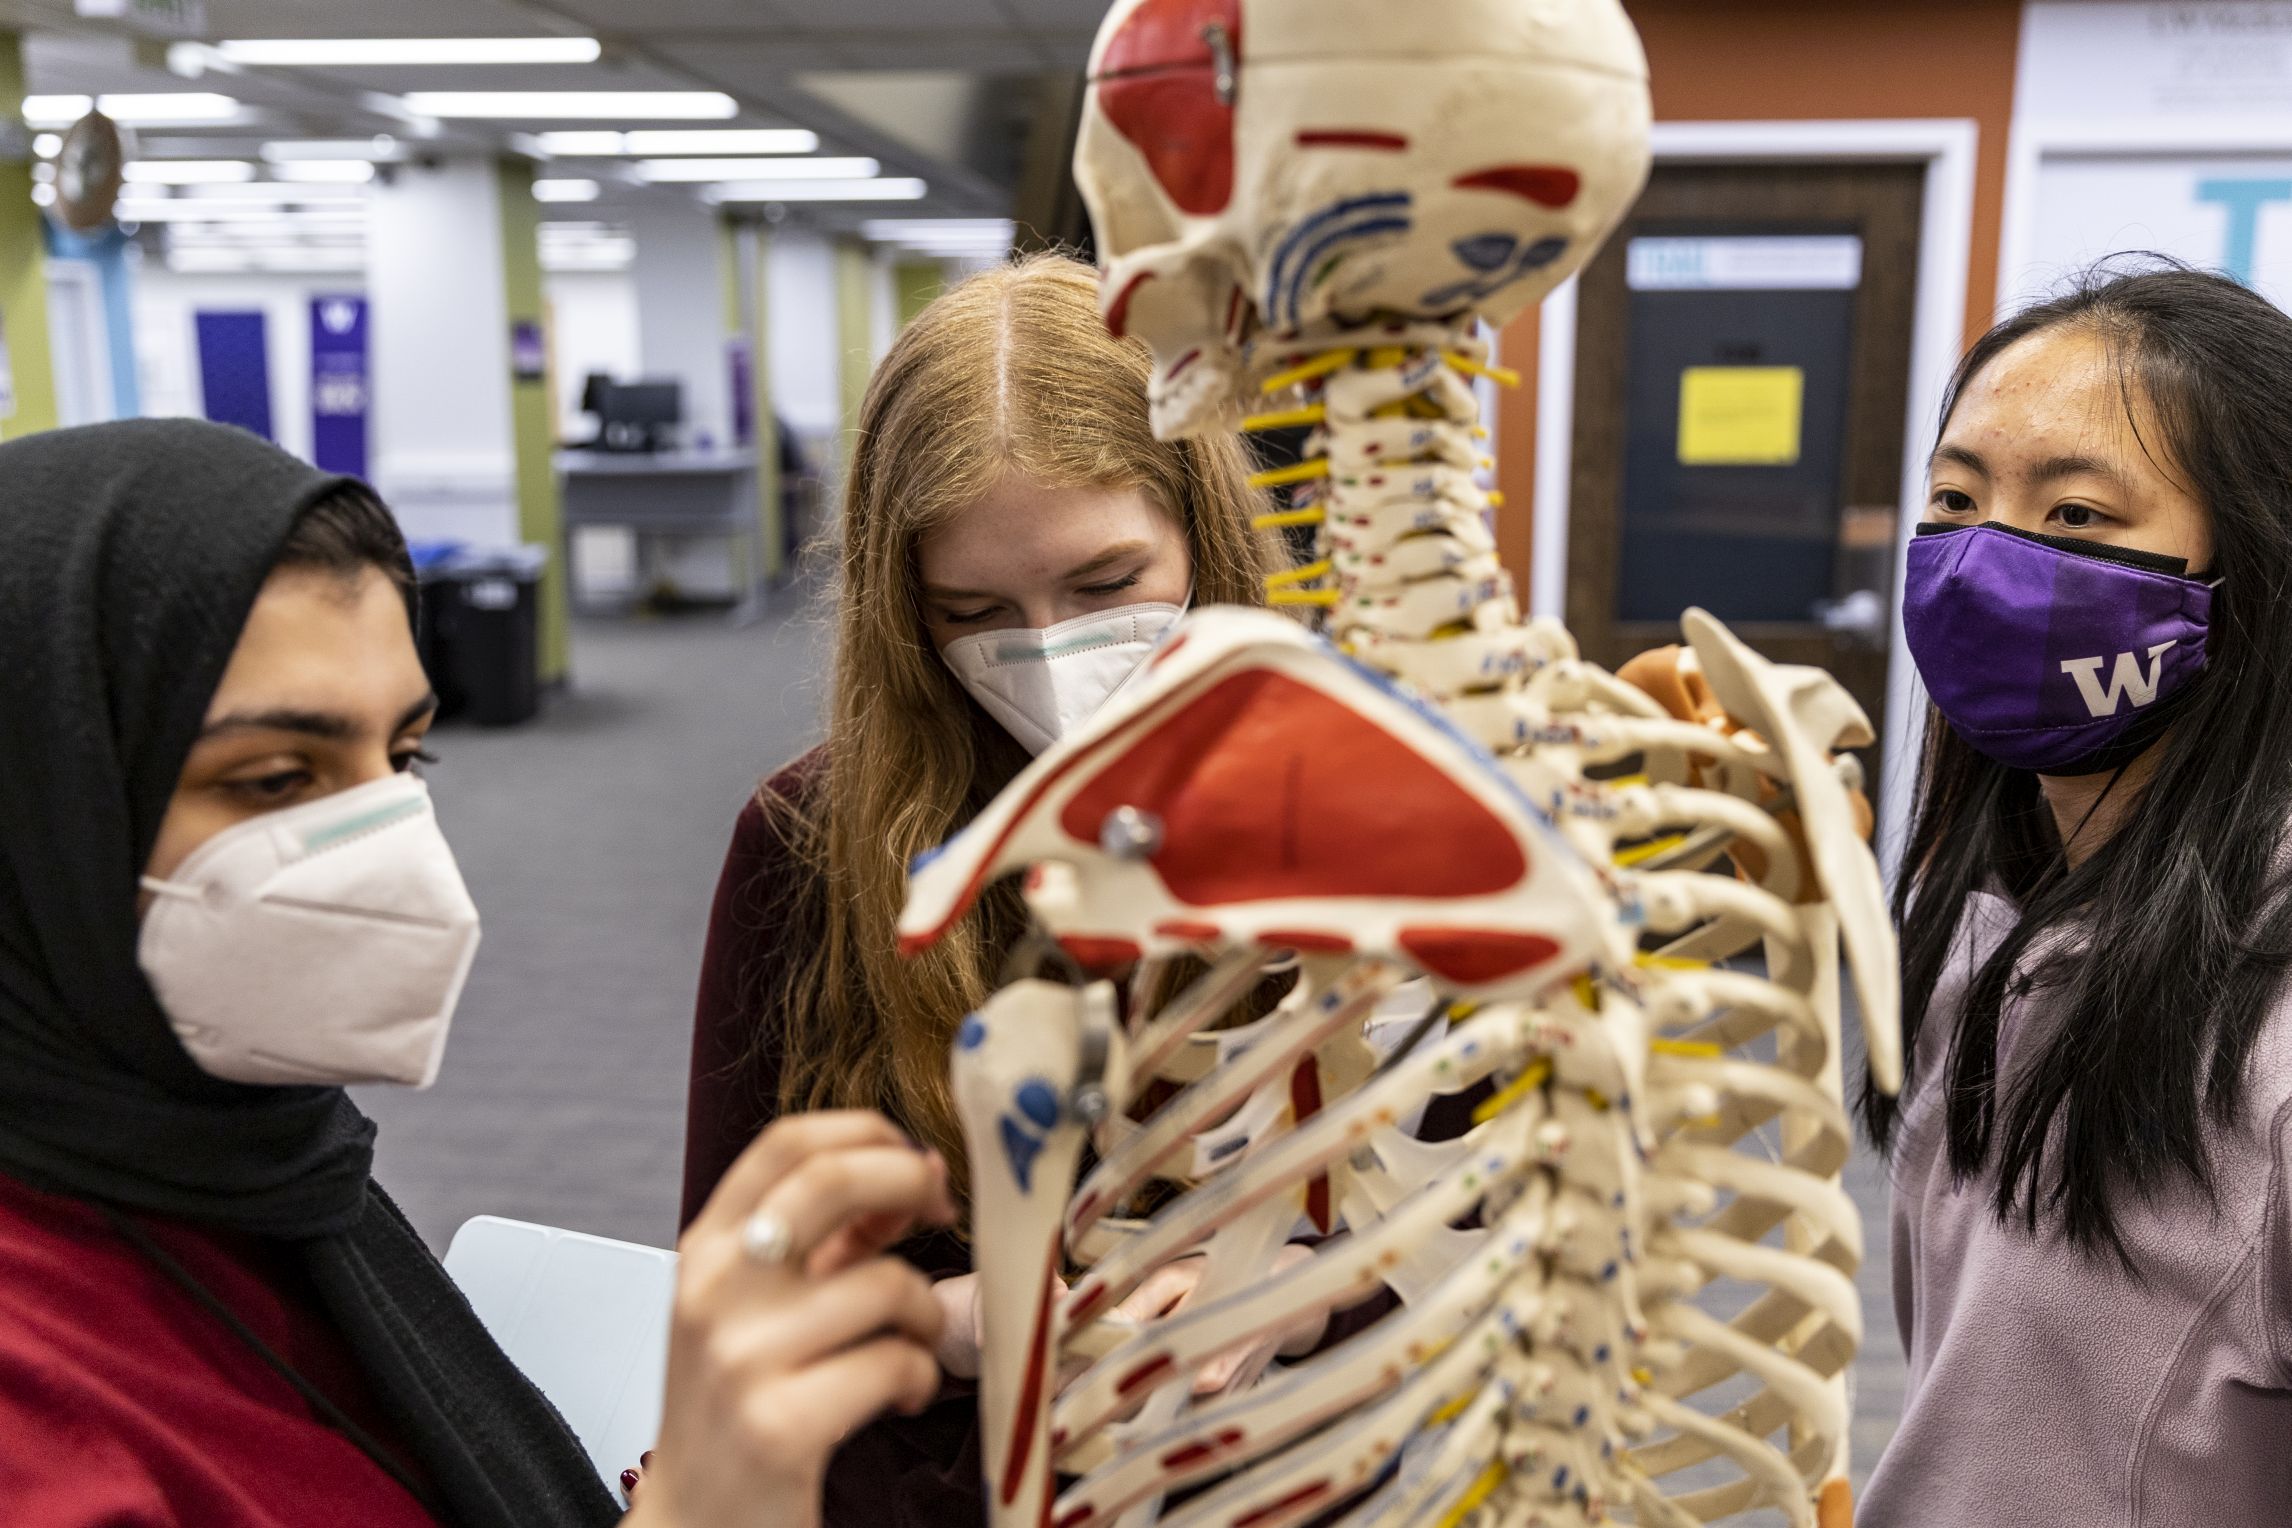 Three students examine a skeleton anatomical model at the University of Washington Health Sciences Library.